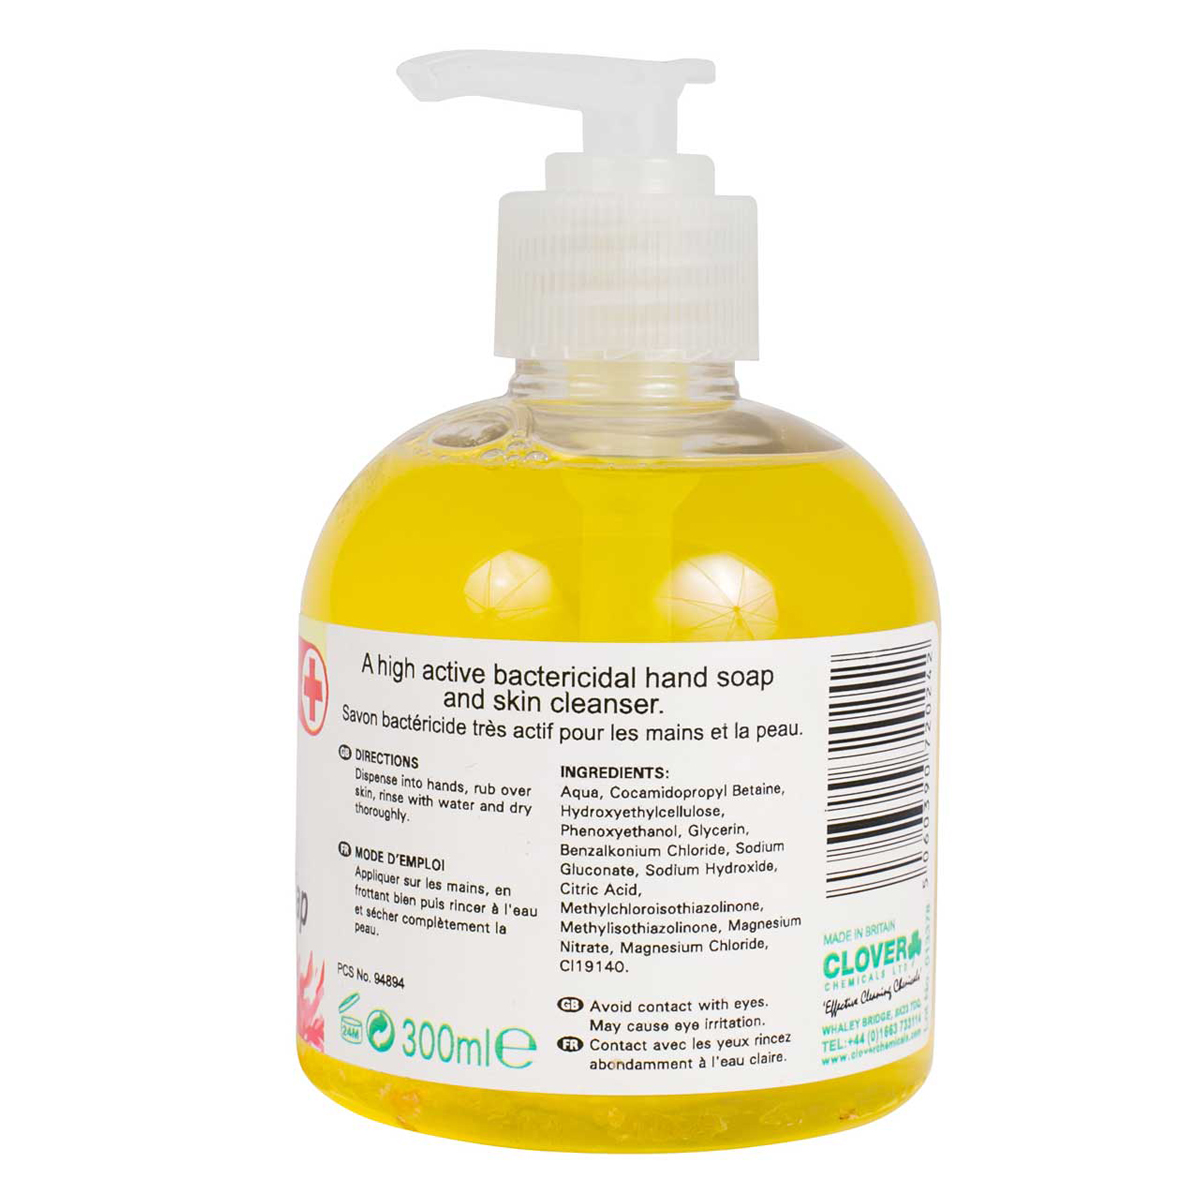 300ml Bio-dox Antibacterial Hand Soap back view